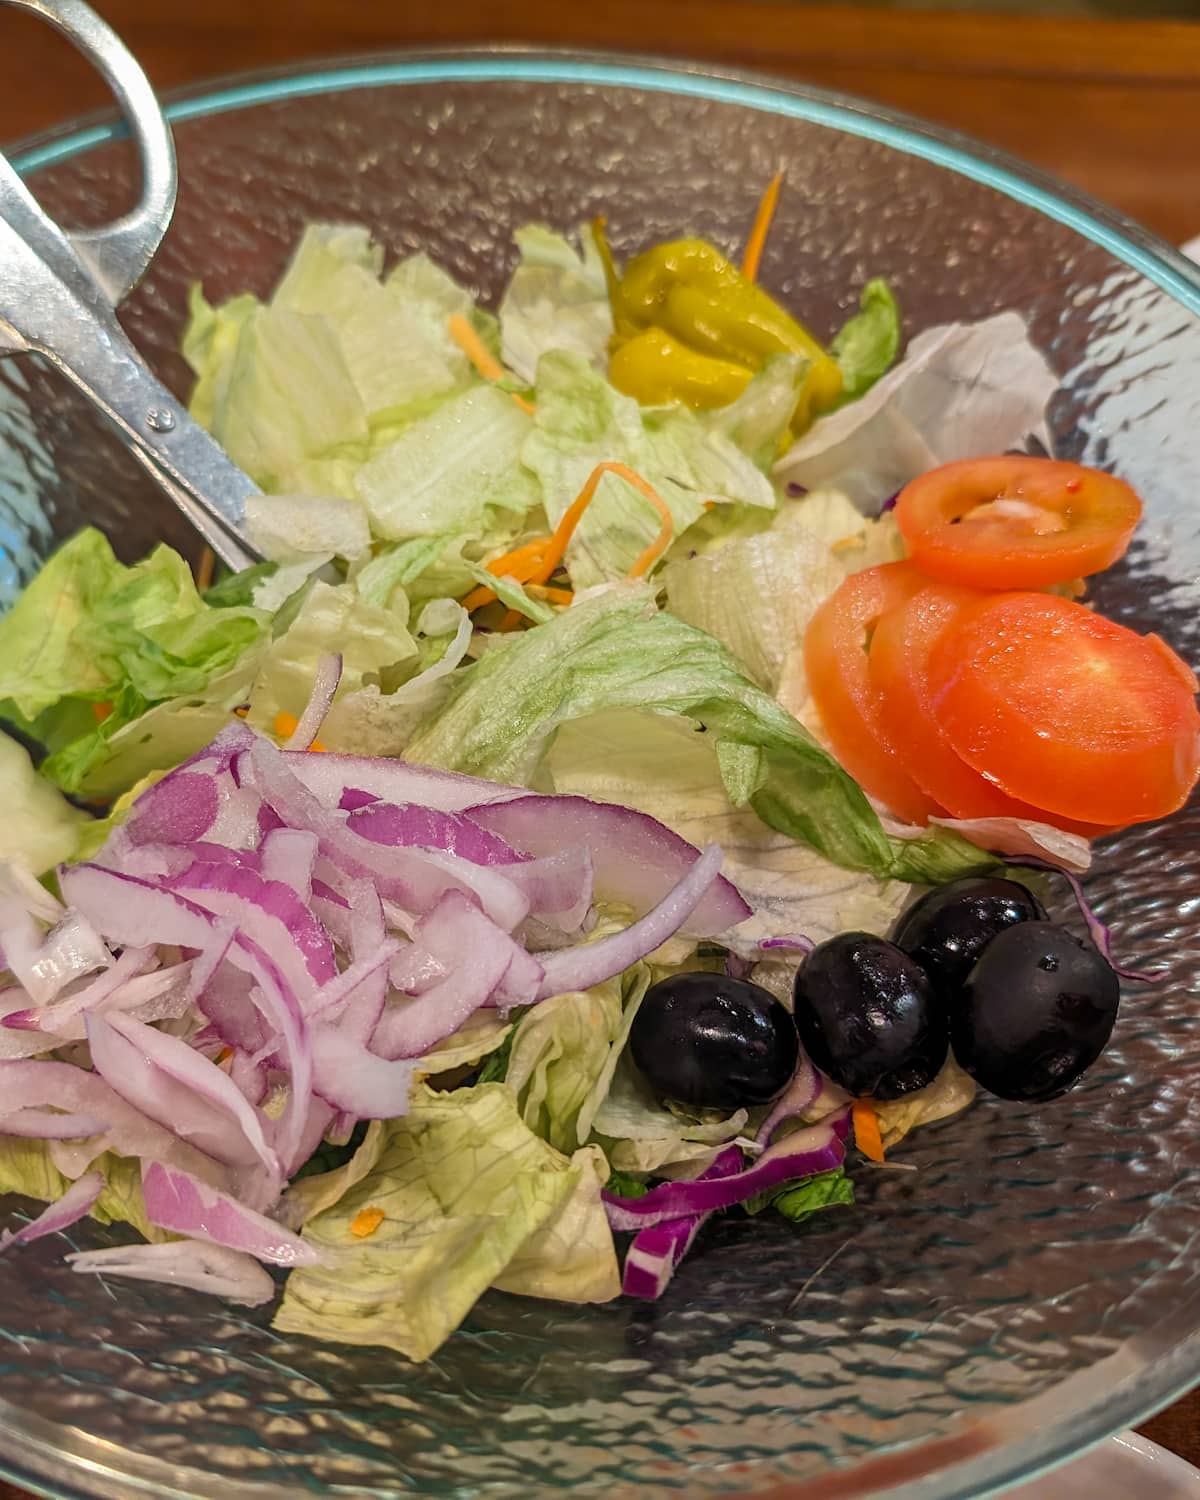 A bowl of Olive Garden's salad.